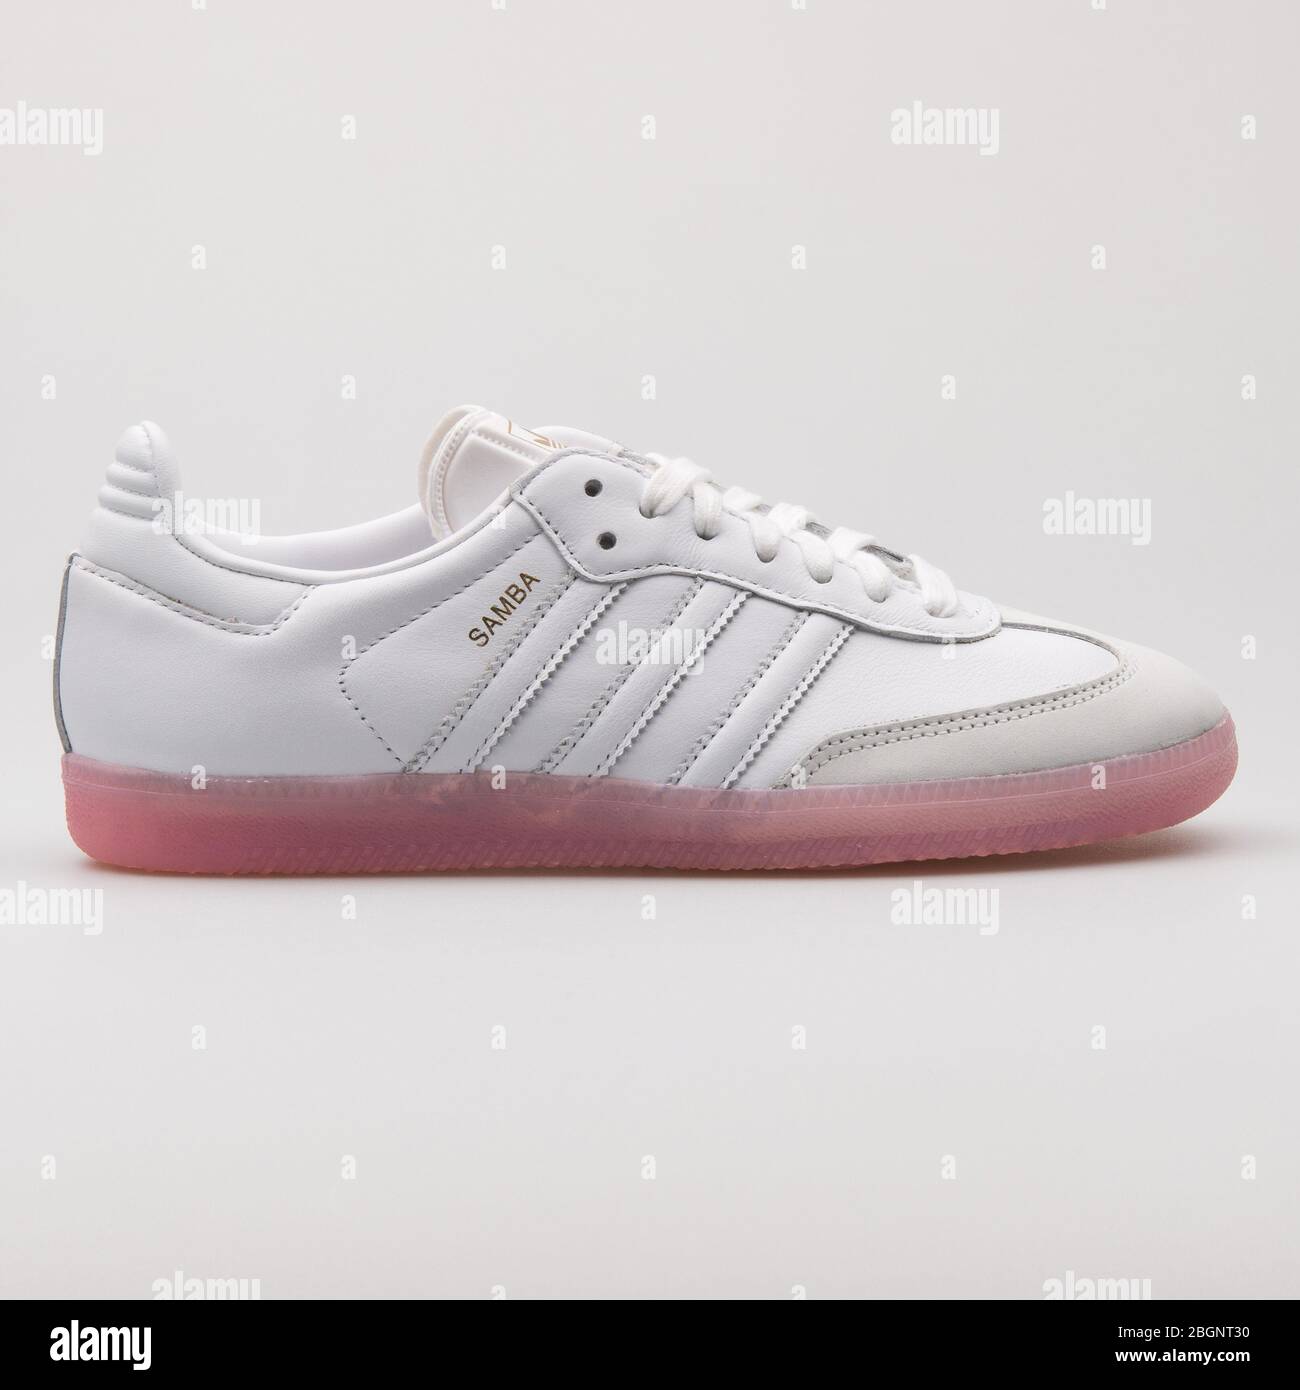 VIENNA, AUSTRIA - AUGUST 24, 2017: Adidas Samba white and pink sneaker on  white background Stock Photo - Alamy